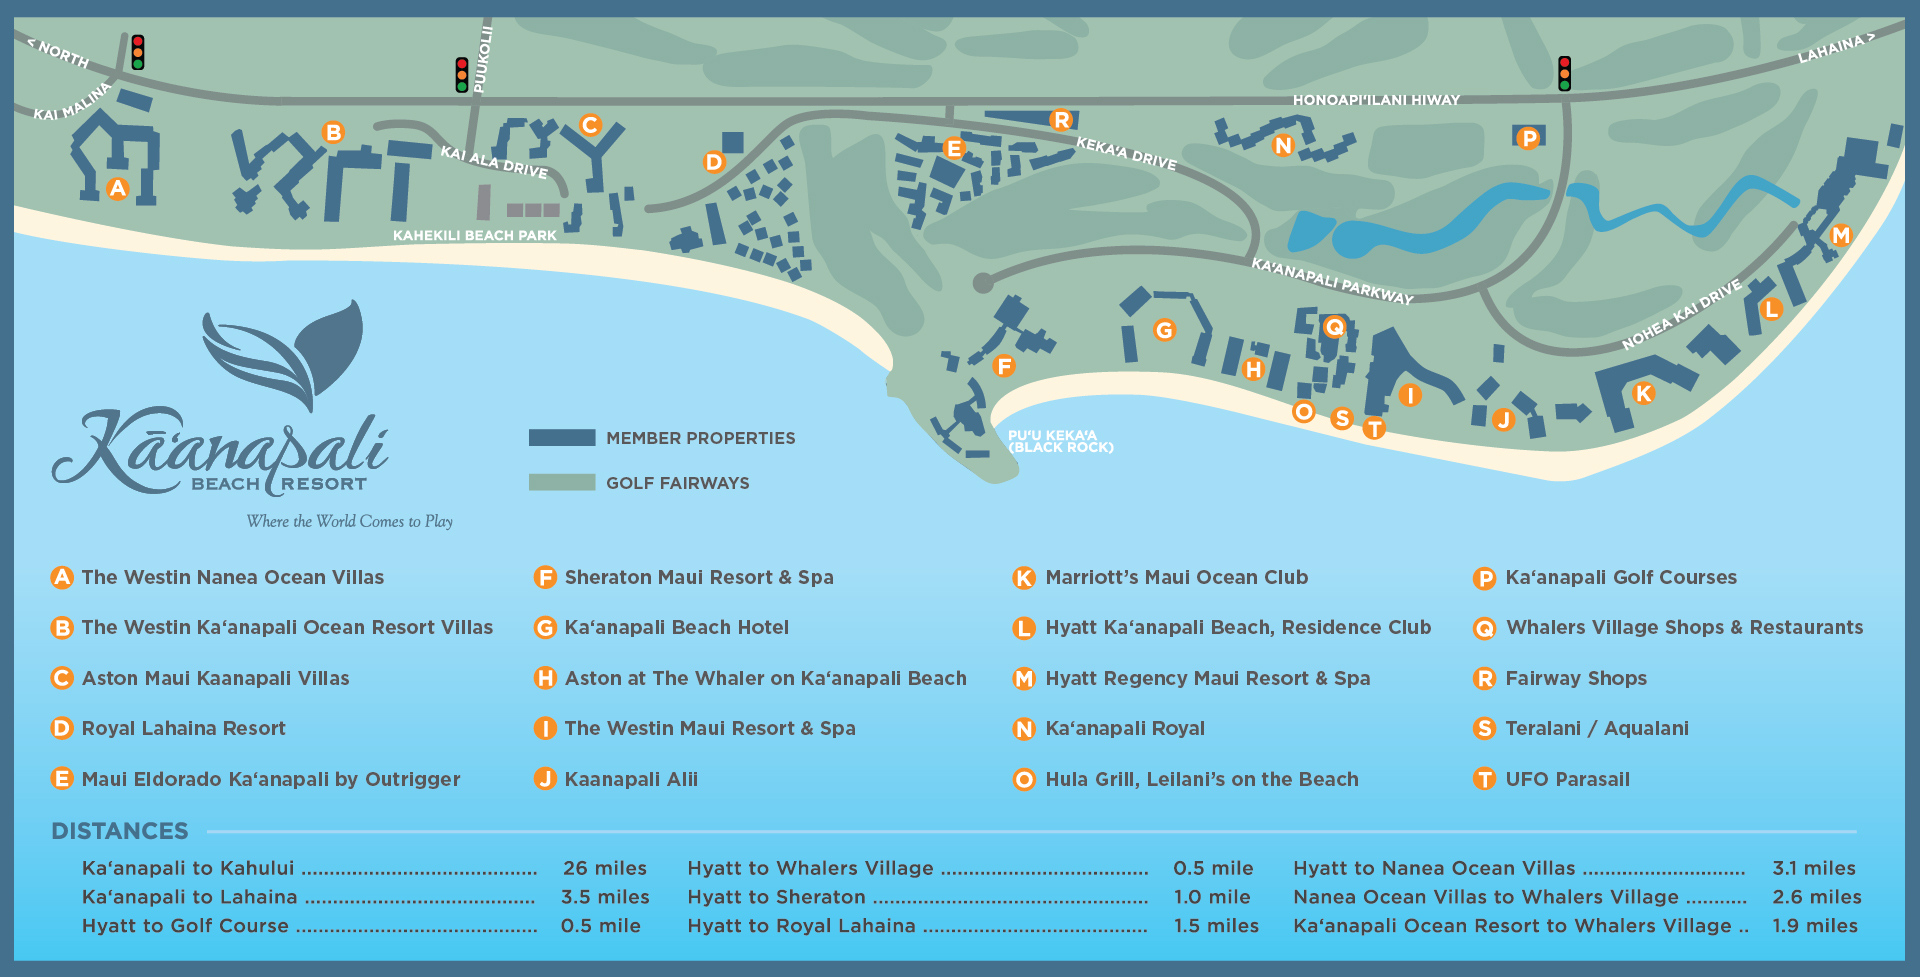 Marriott S Maui Ocean Club Ka Anapali Beach Resort Association 